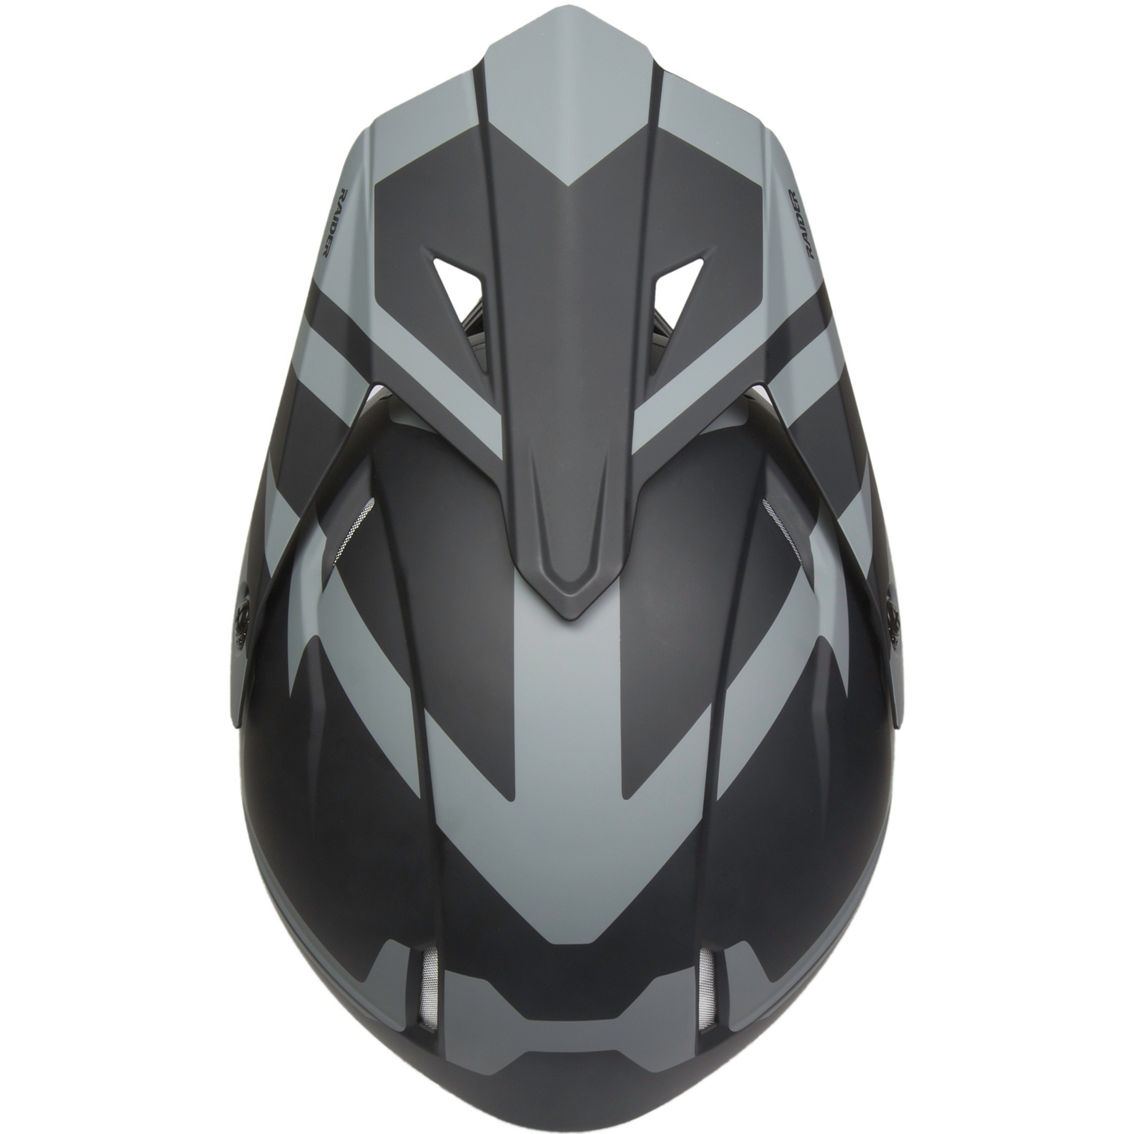 Raider Z7 MX Helmet - Image 5 of 6